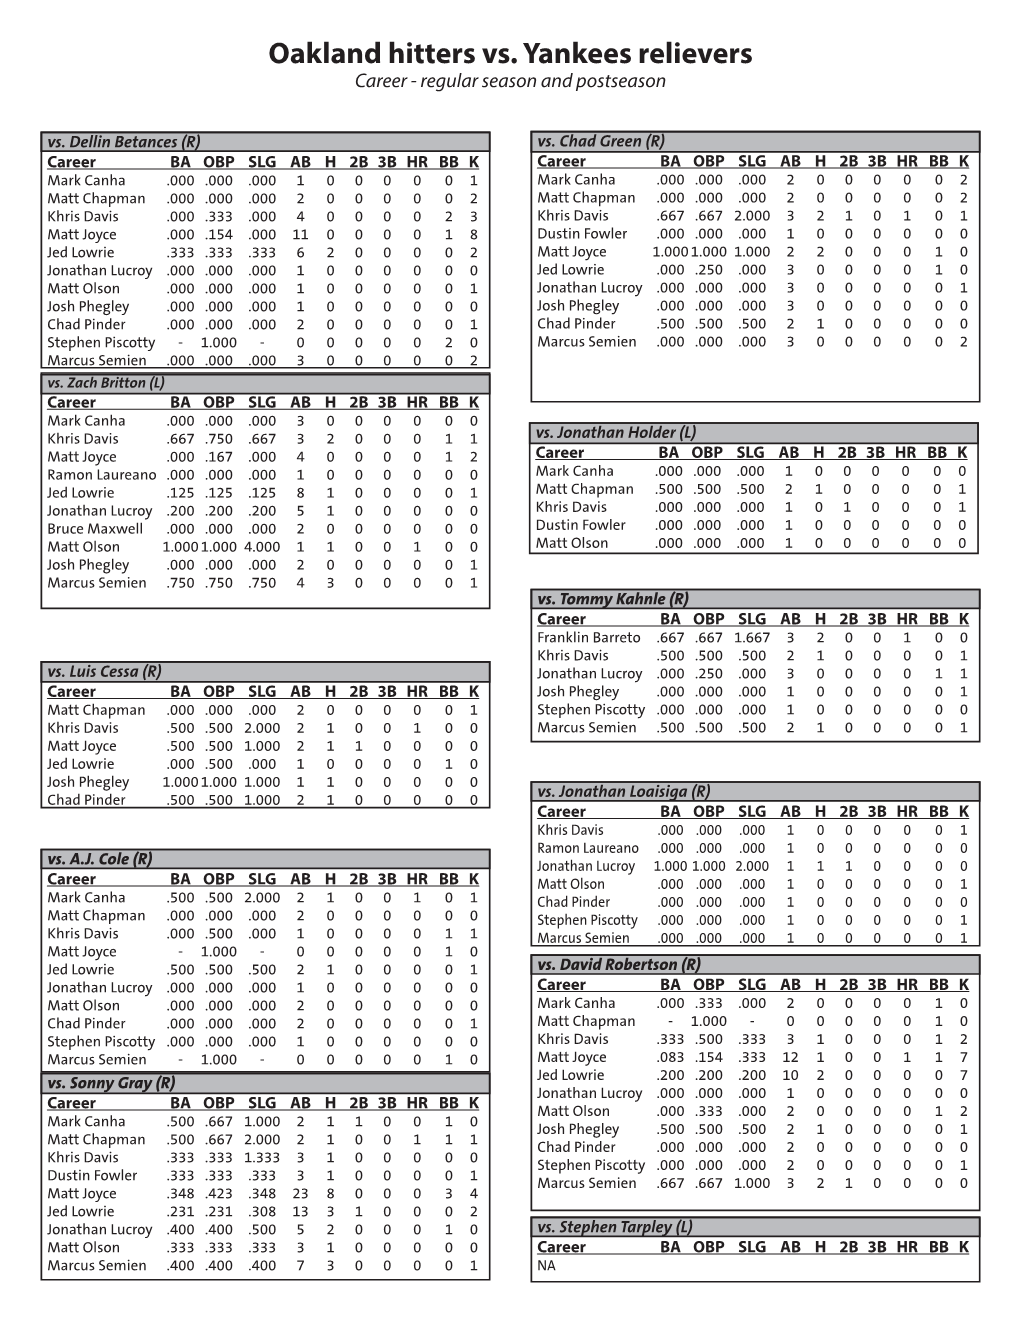 Oakland Hitters Vs. Yankees Relievers Career - Regular Season and Postseason Vs